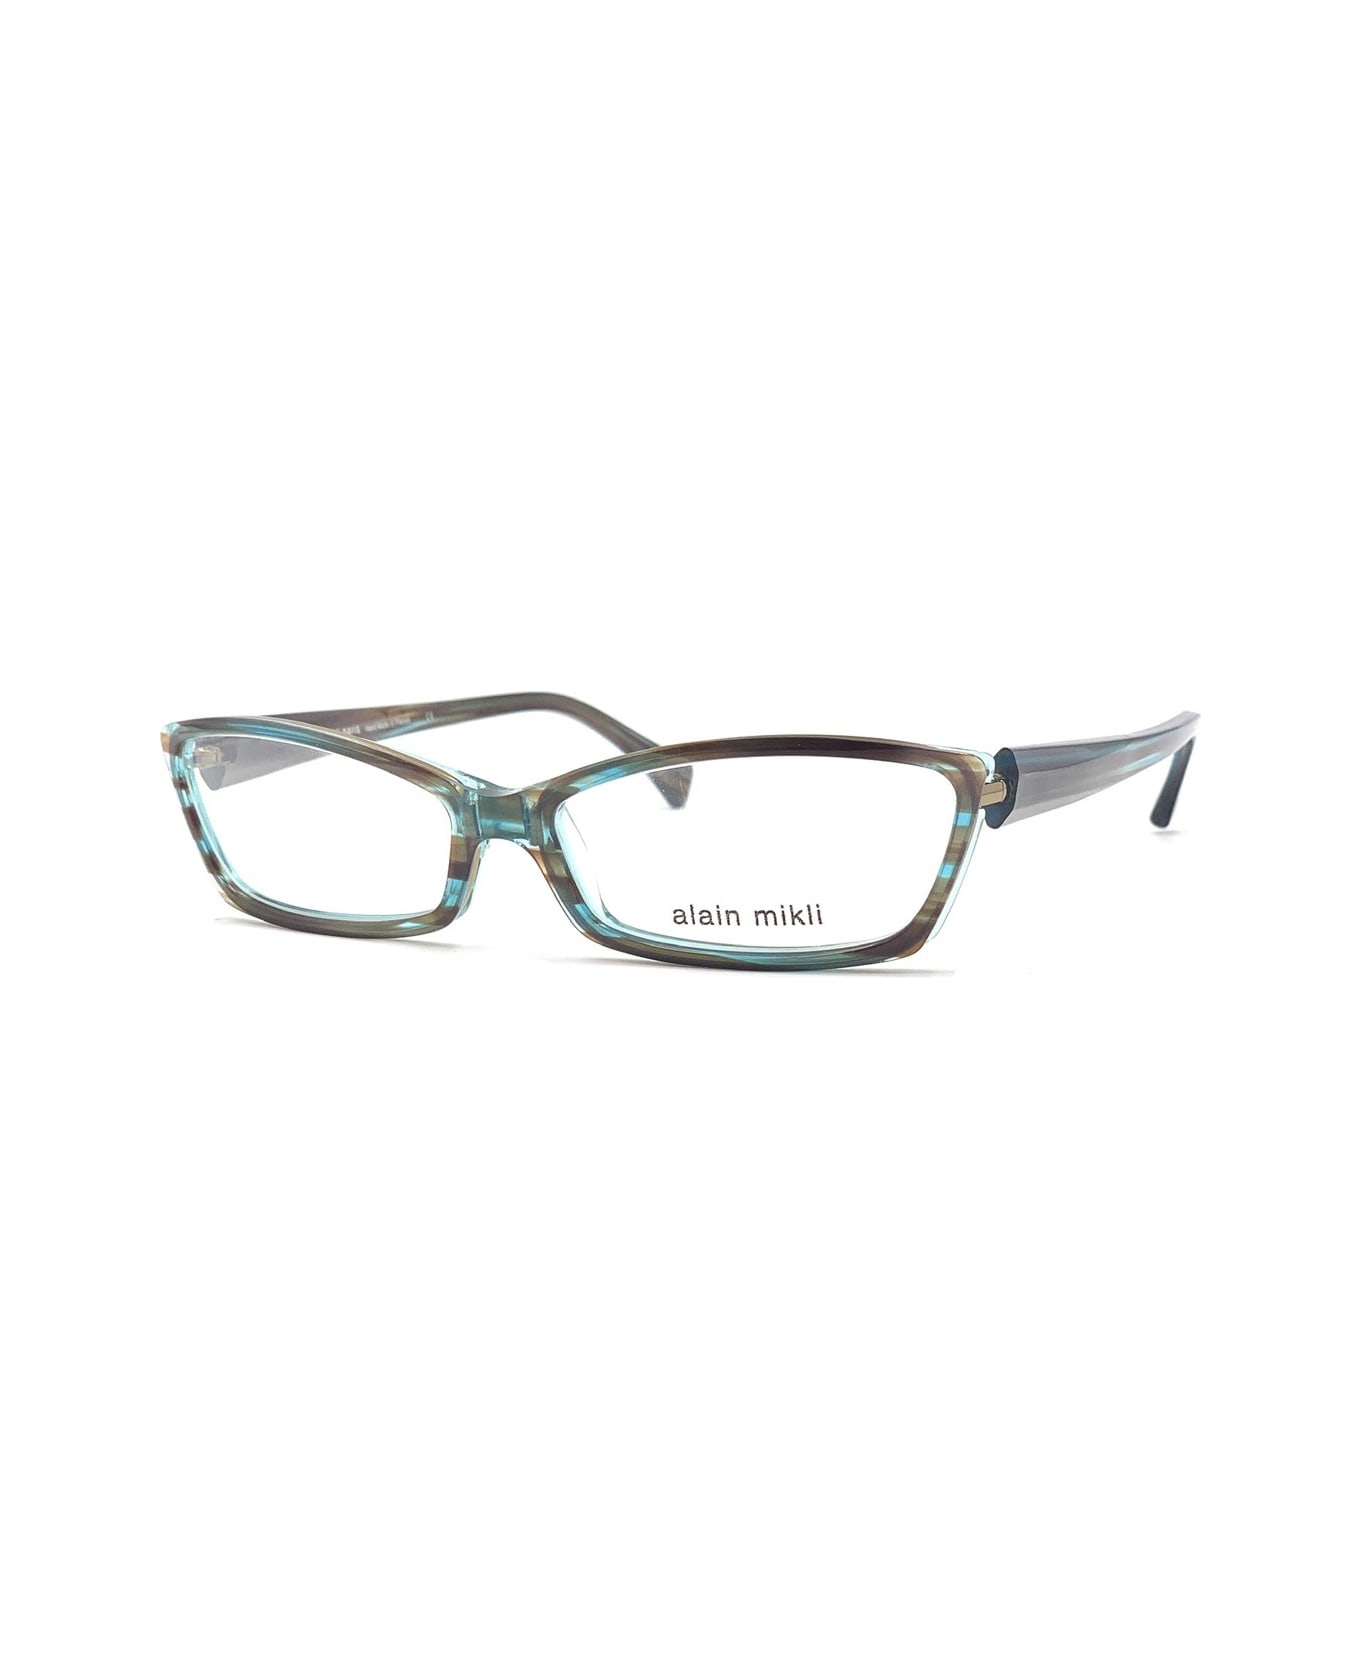 Alain Mikli A013 Glasses - Verde アイウェア